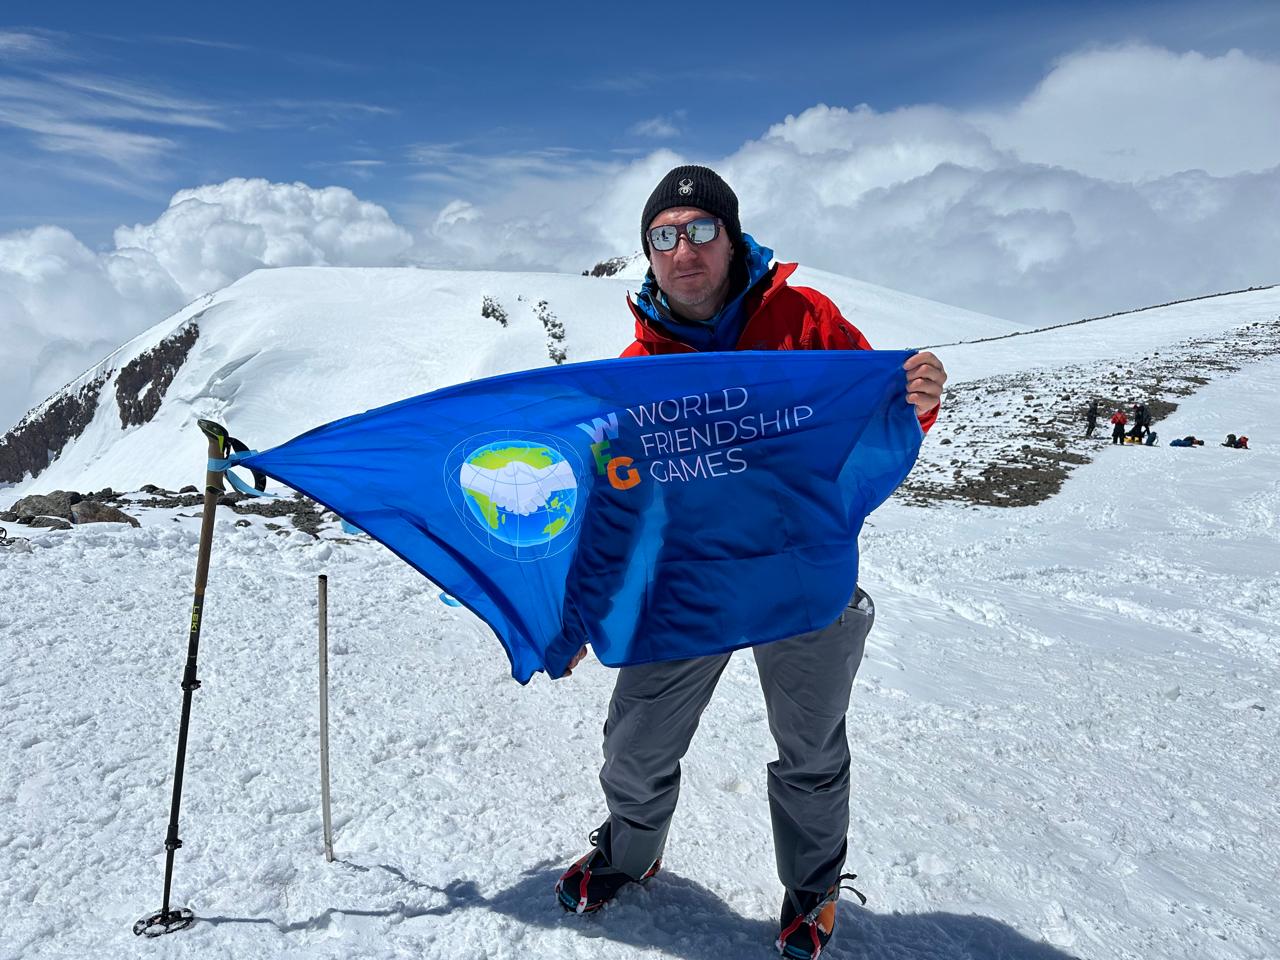 World Friendship Games Flag Raised on Mount Elbrus